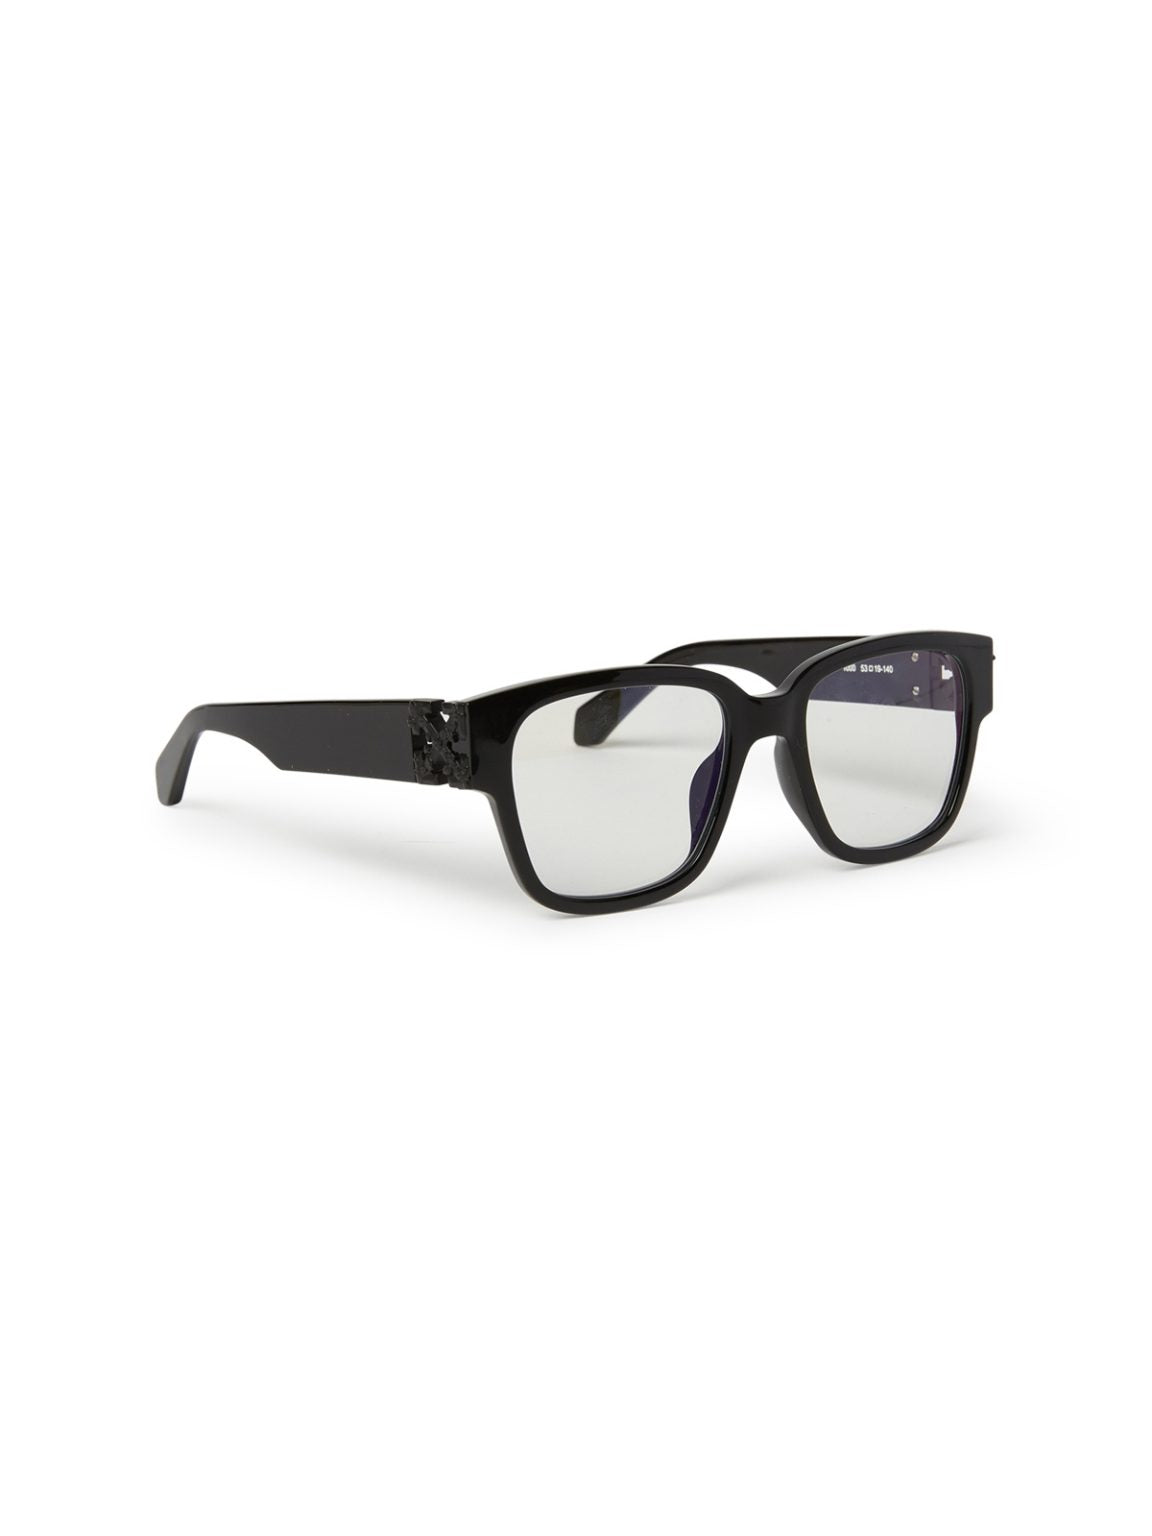 Off-White Style 47 Black G 53mm New Eyeglasses